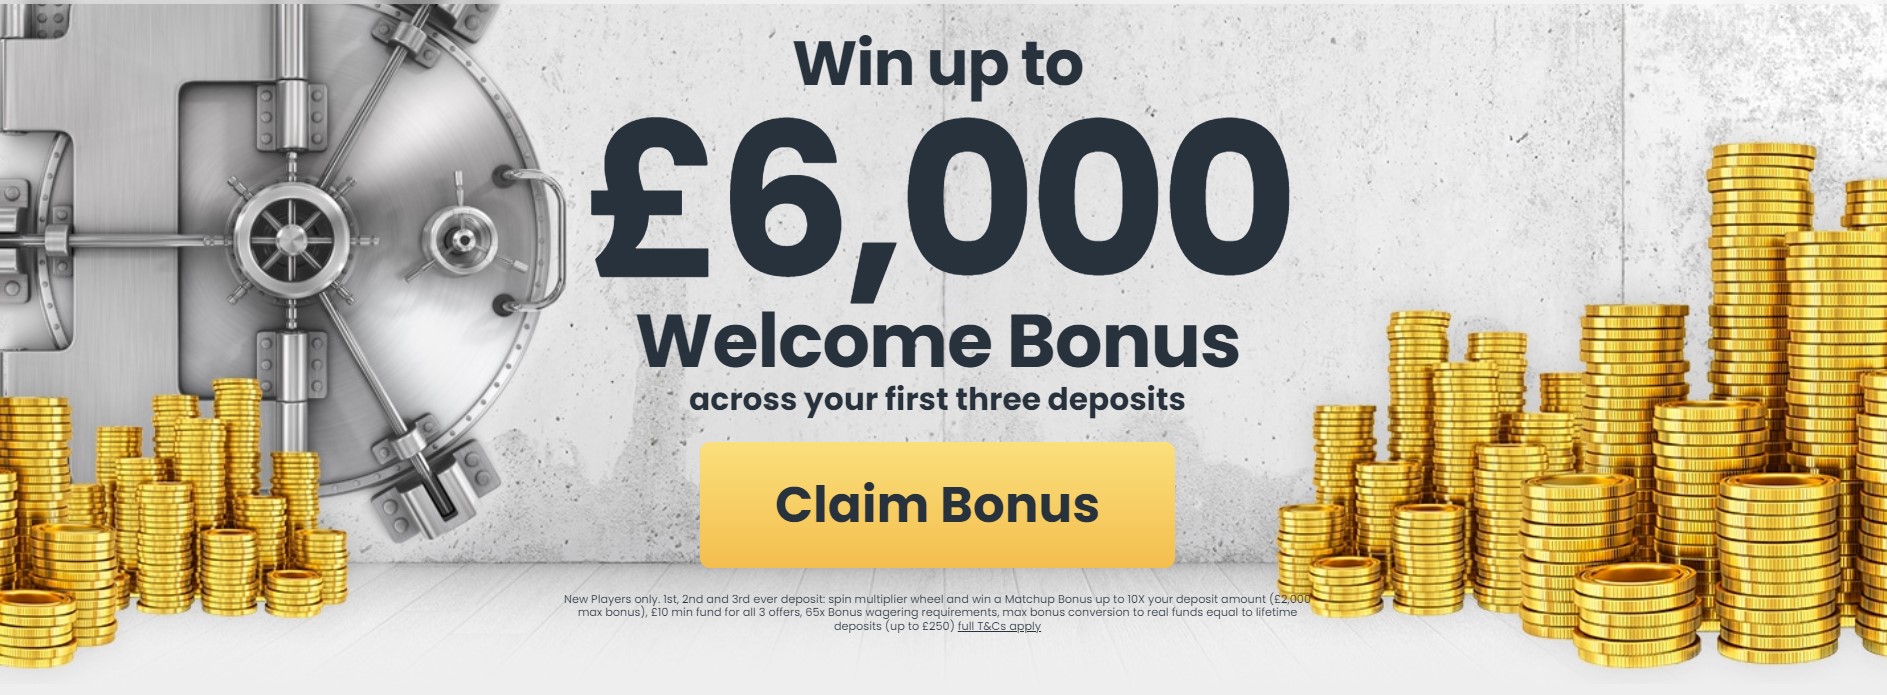 Loot Casino Welcome Bonus